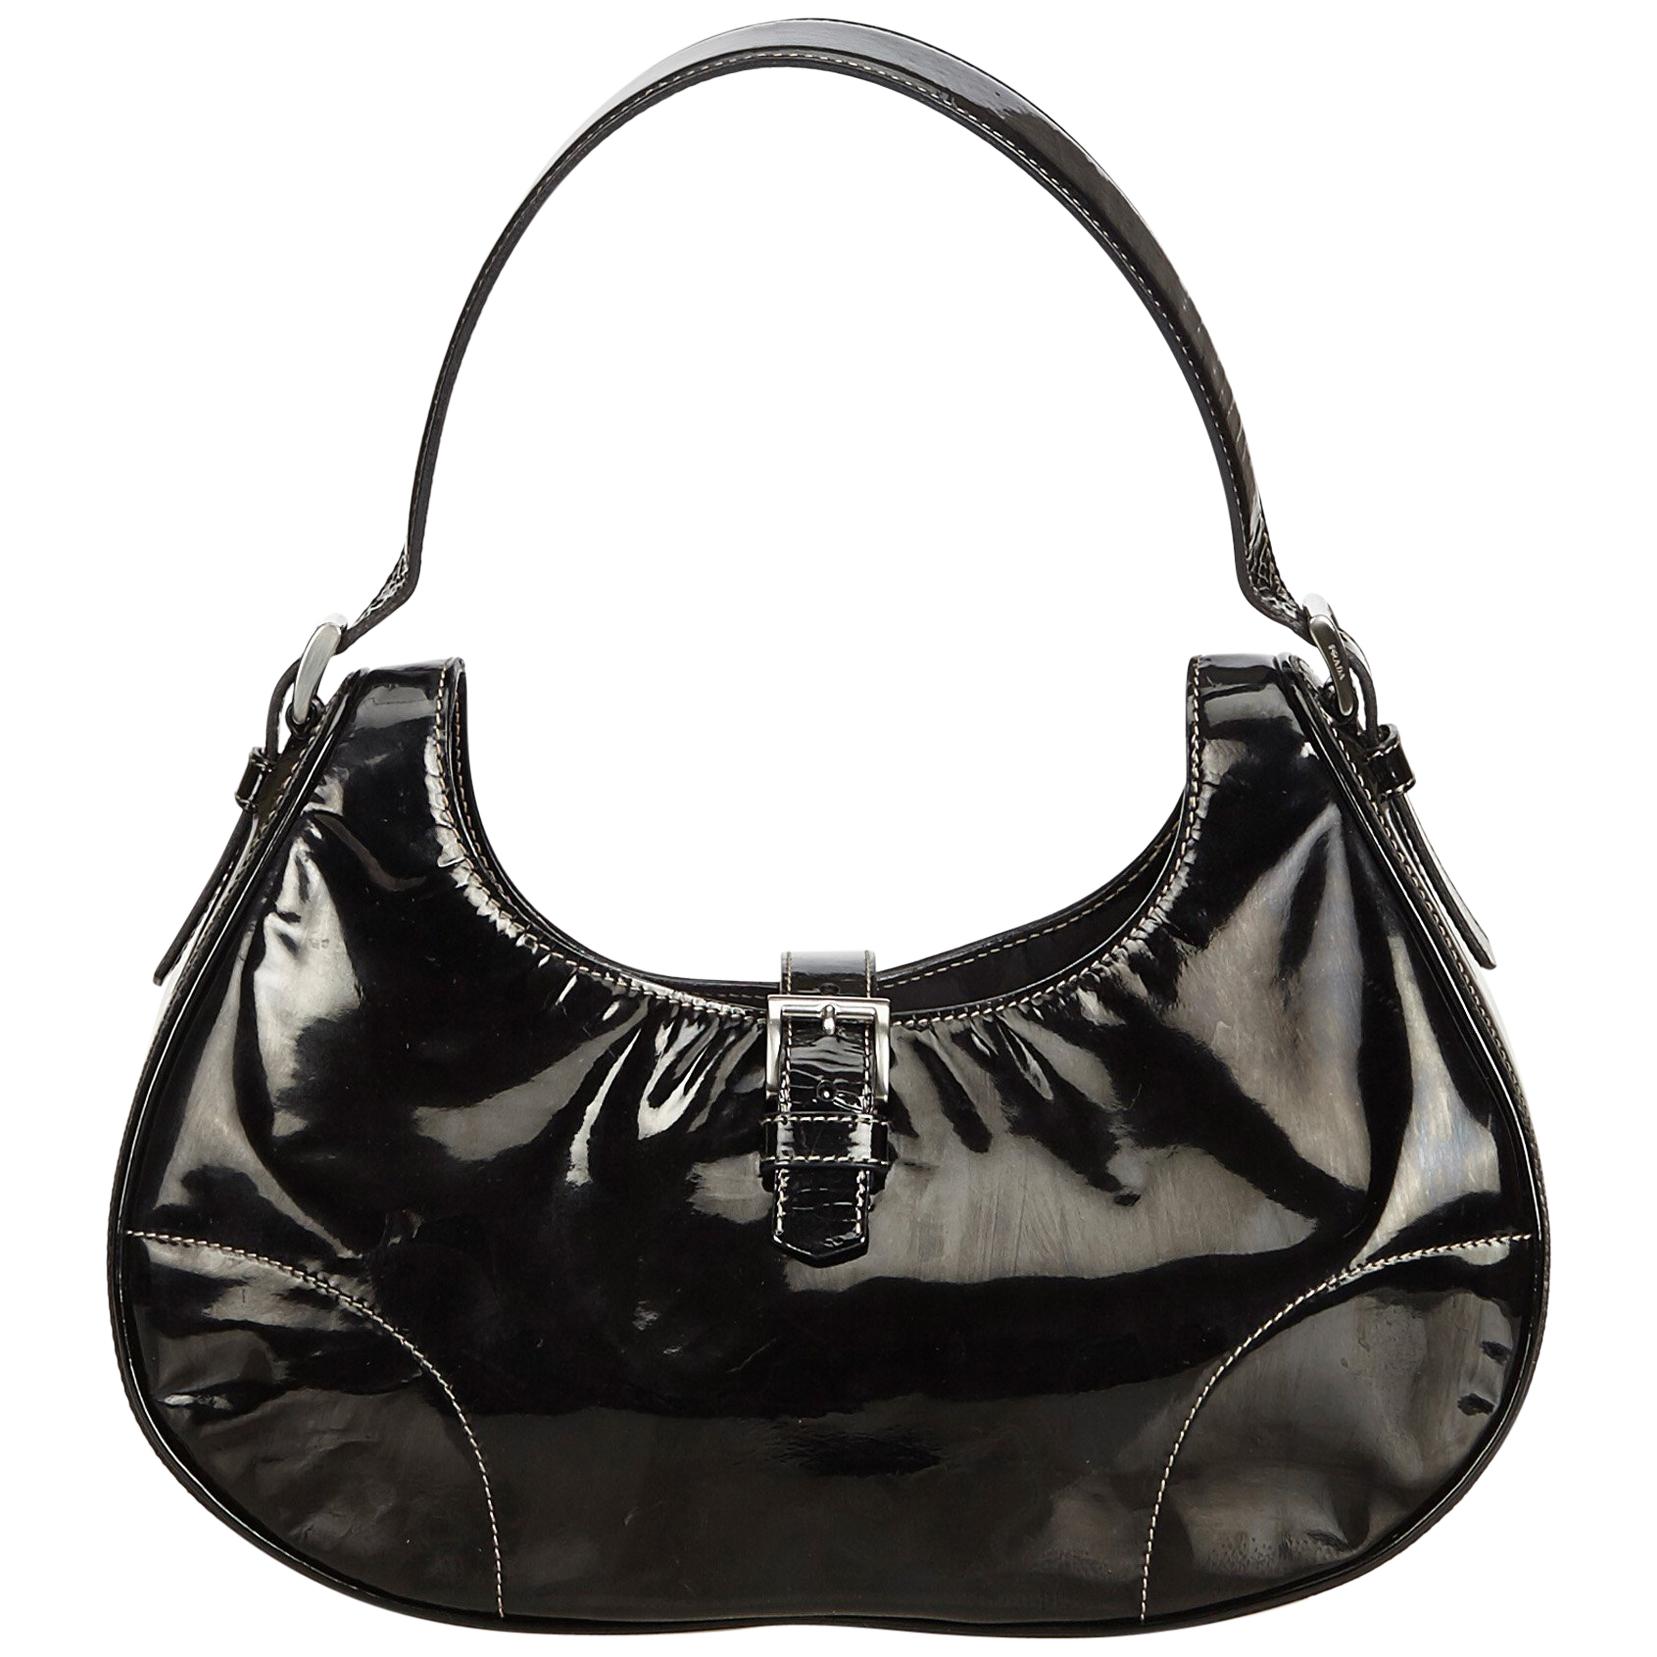 Prada Black Patent Leather Hobo Bag